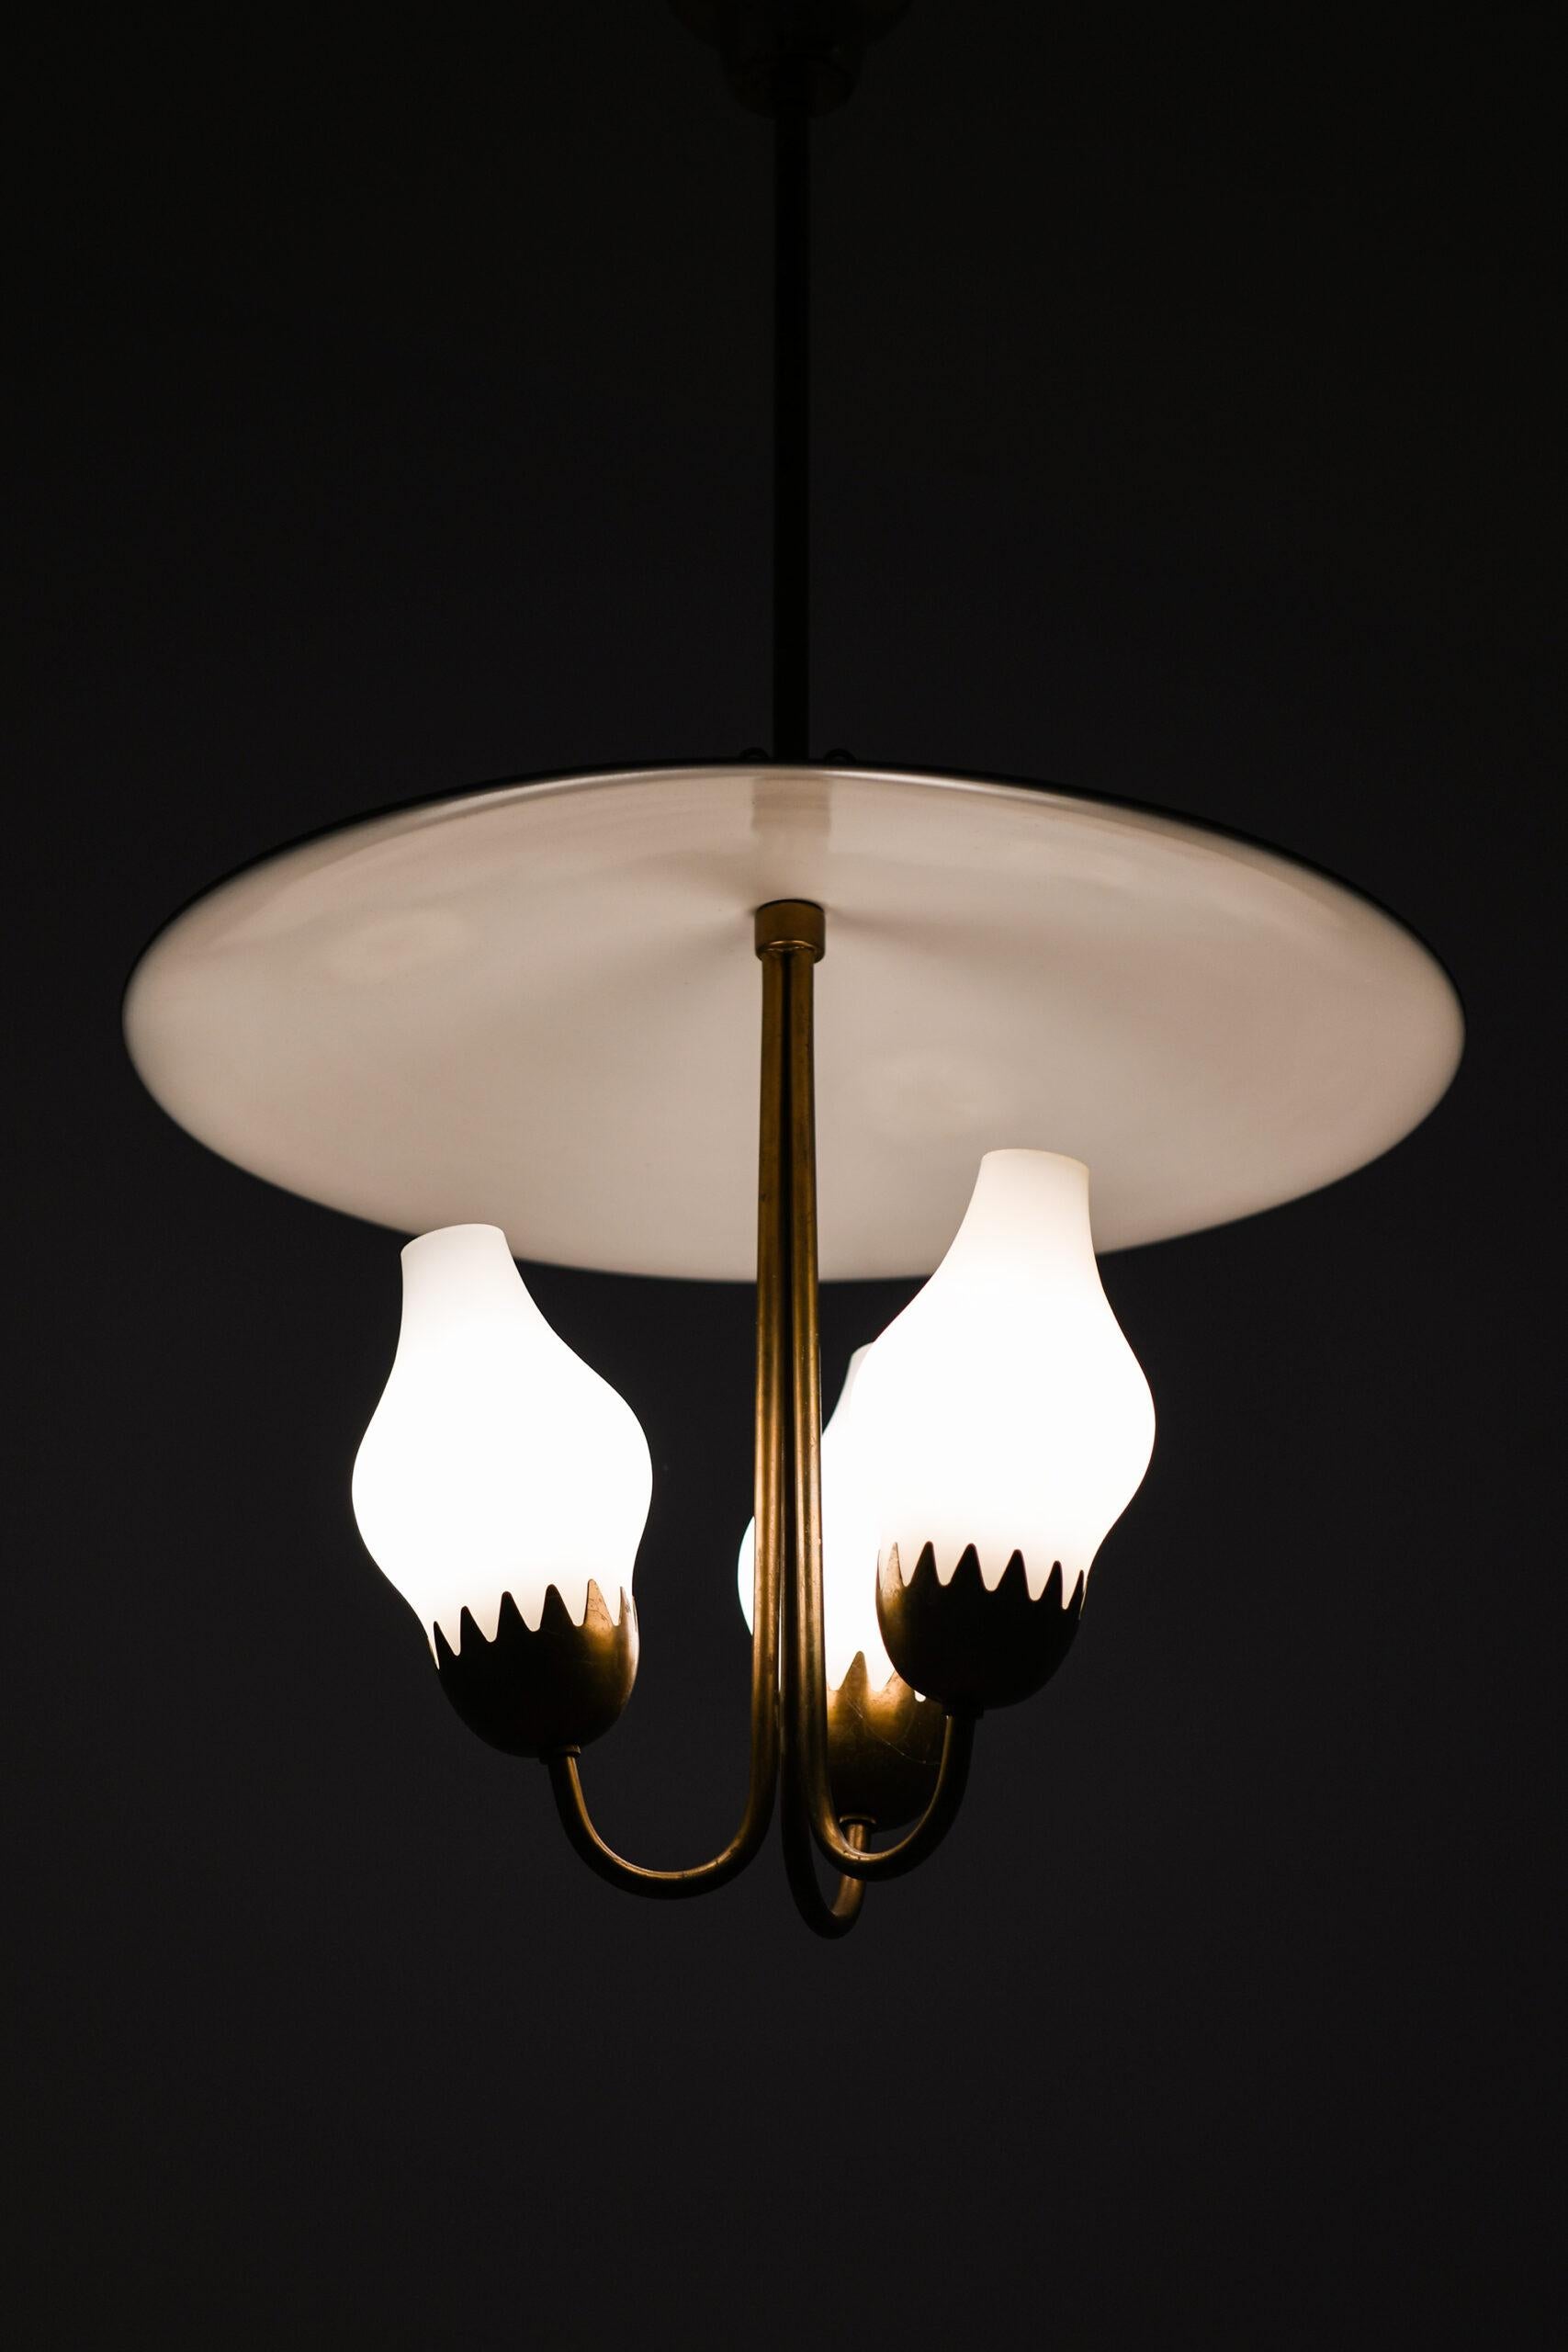 Hans Bergström Ceiling Lamp Model Nr 95 Produced by Ateljé Lyktan 1